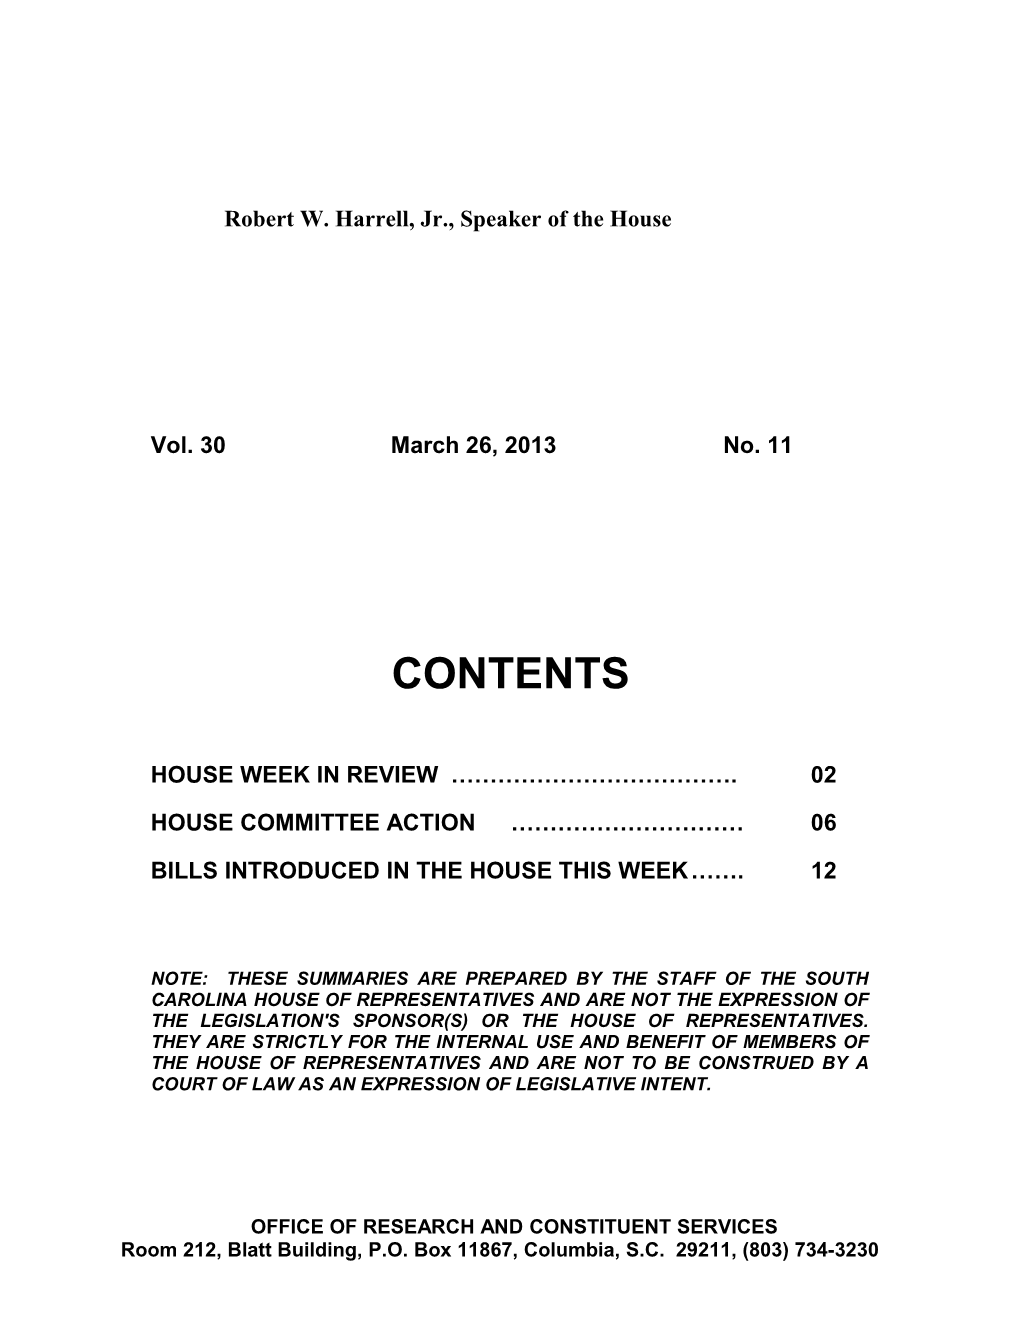 Legislative Update - Vol. 30 No. 11 March 26, 2013 - South Carolina Legislature Online